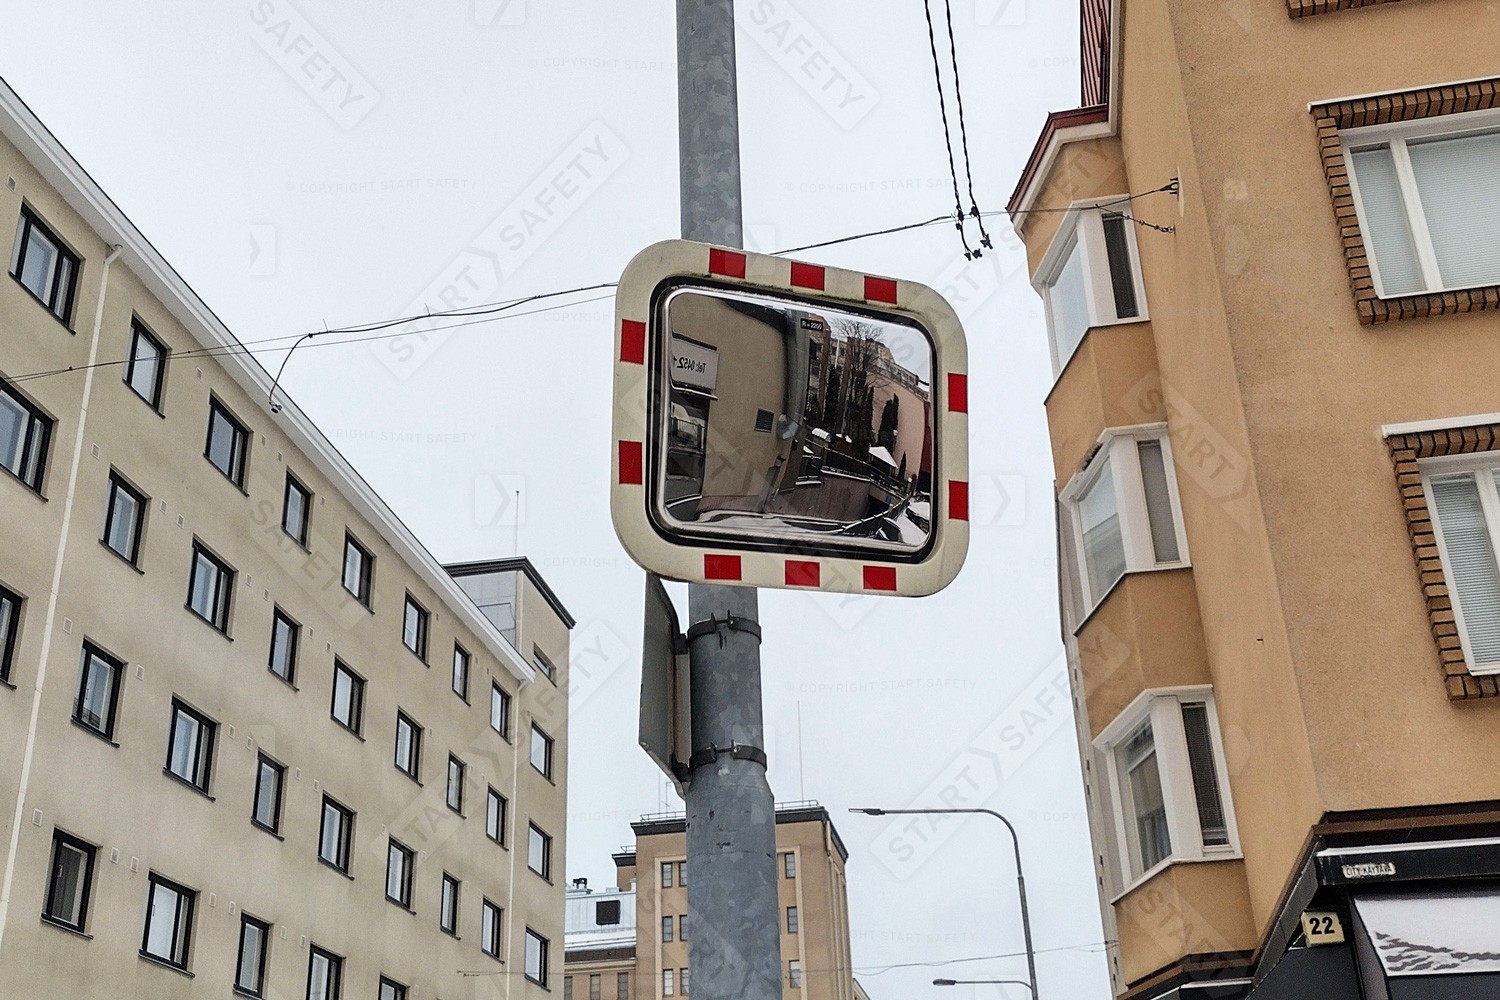 Traffic Mirror installed on City Street